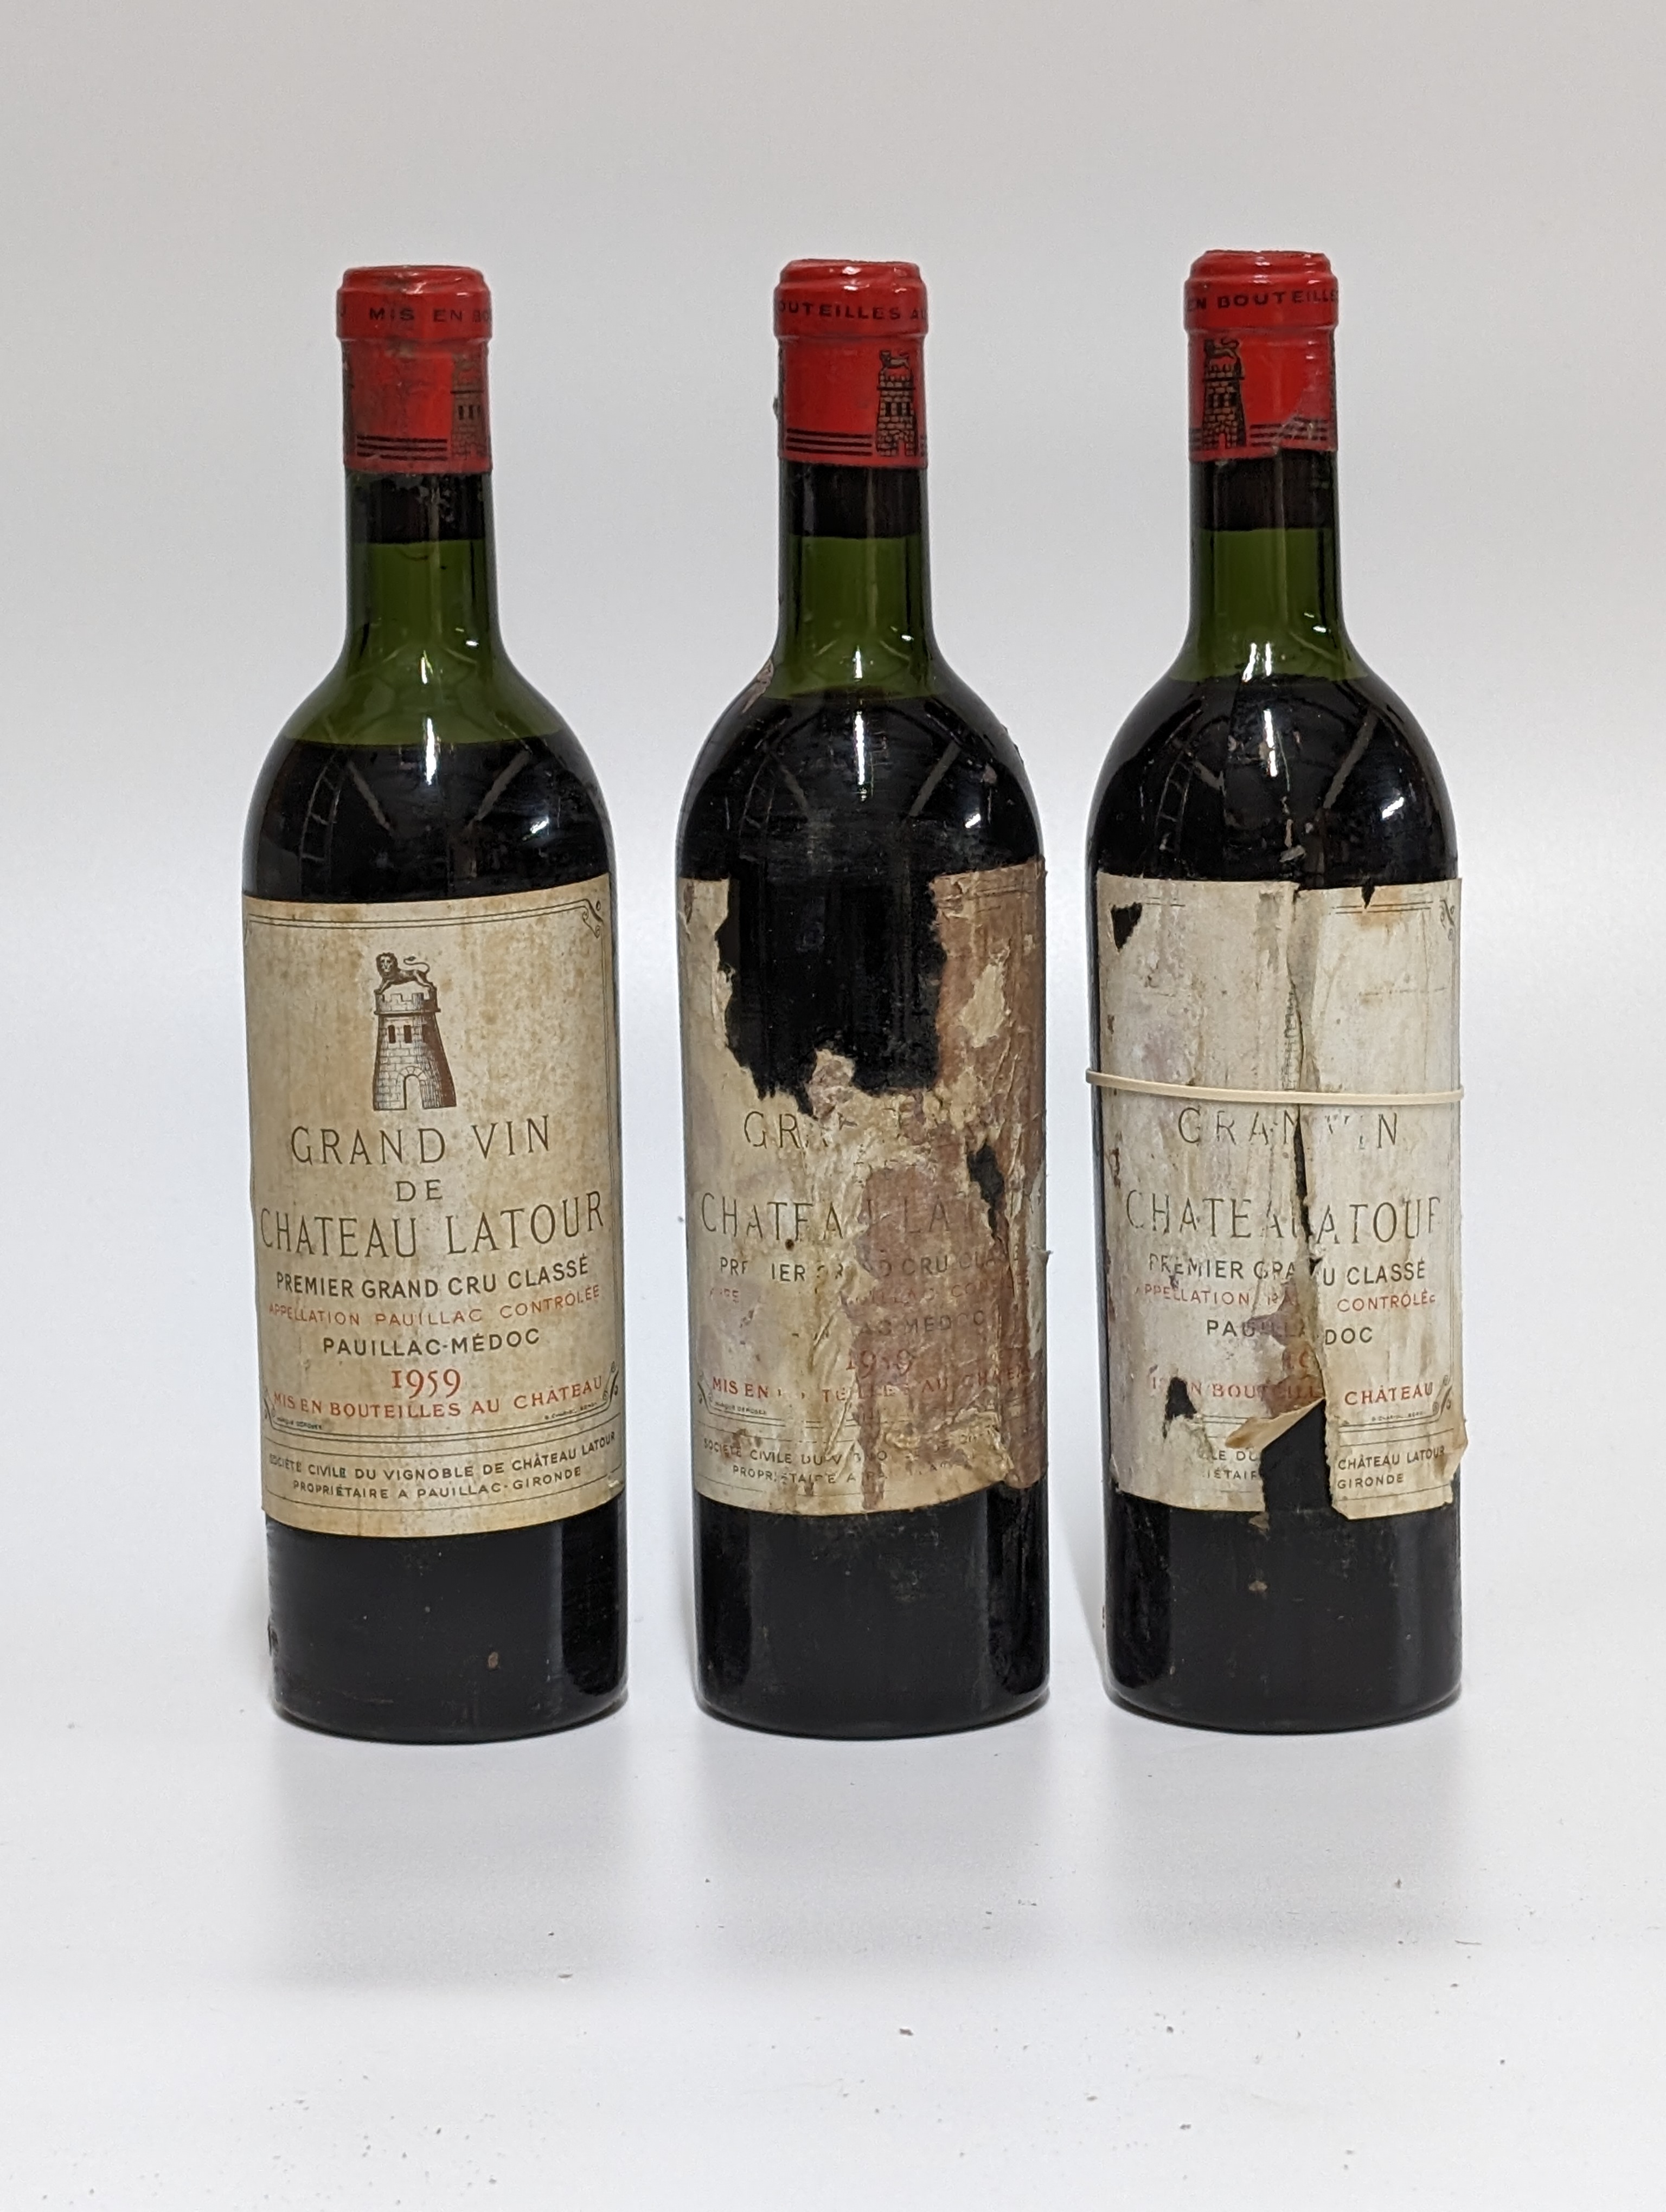 Chateau Latour, 1er Cru Classe, Pauillac, 1959, three bottles